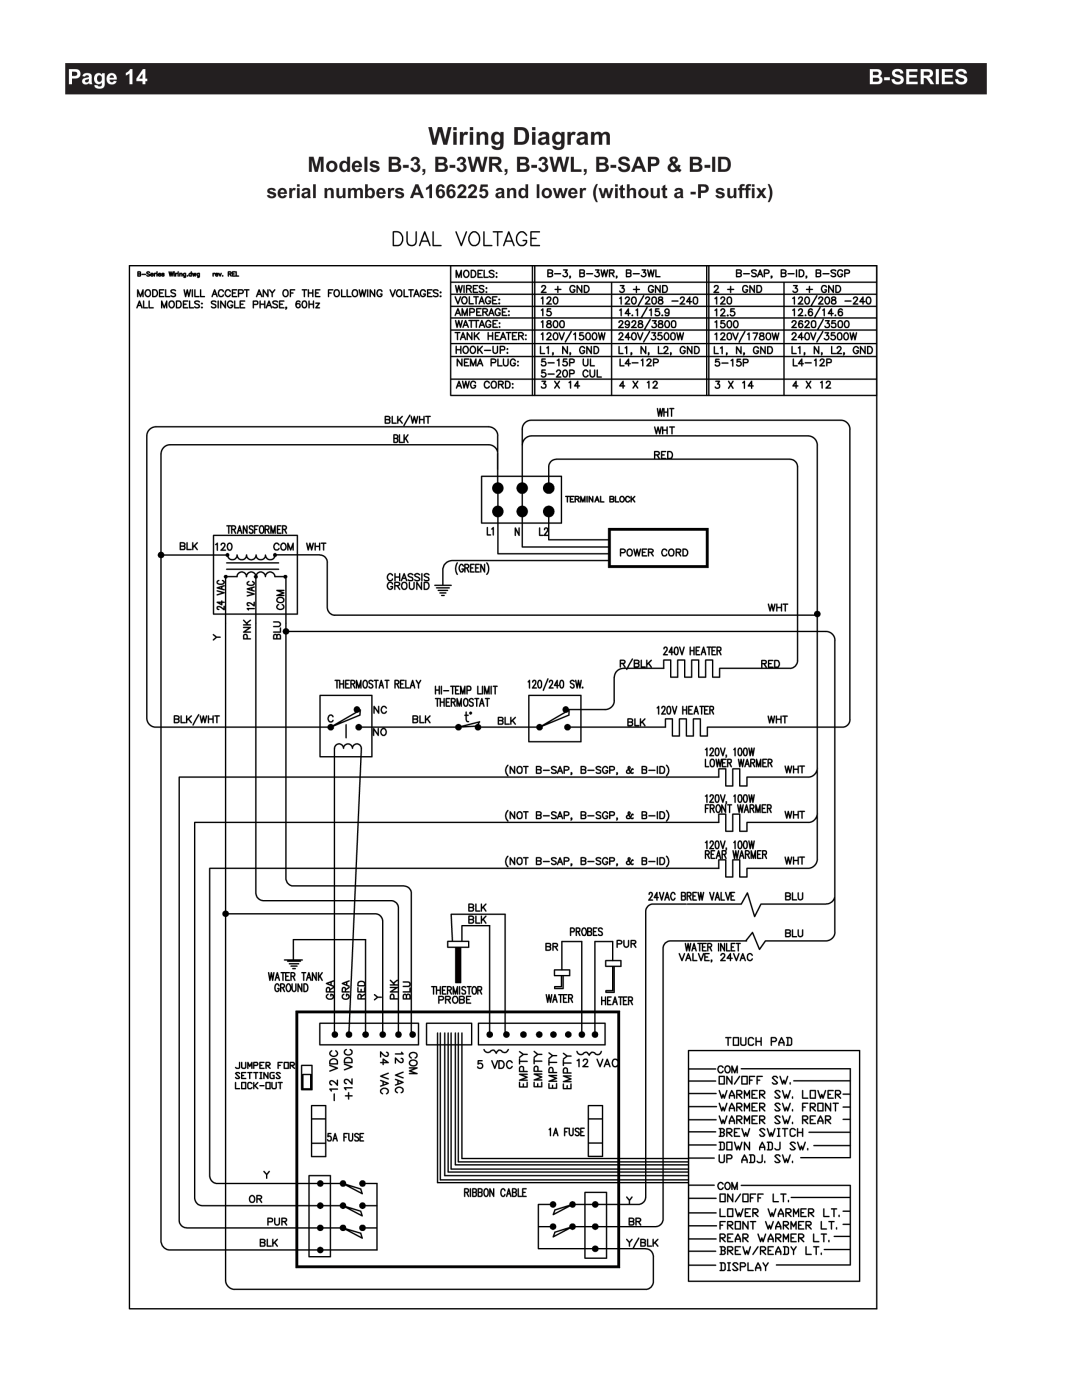 Grindmaster AMW B-Series manual Wiring Diagram, Models B-3, B-3WR, B-3WL, B-SAP & B-ID, Page 